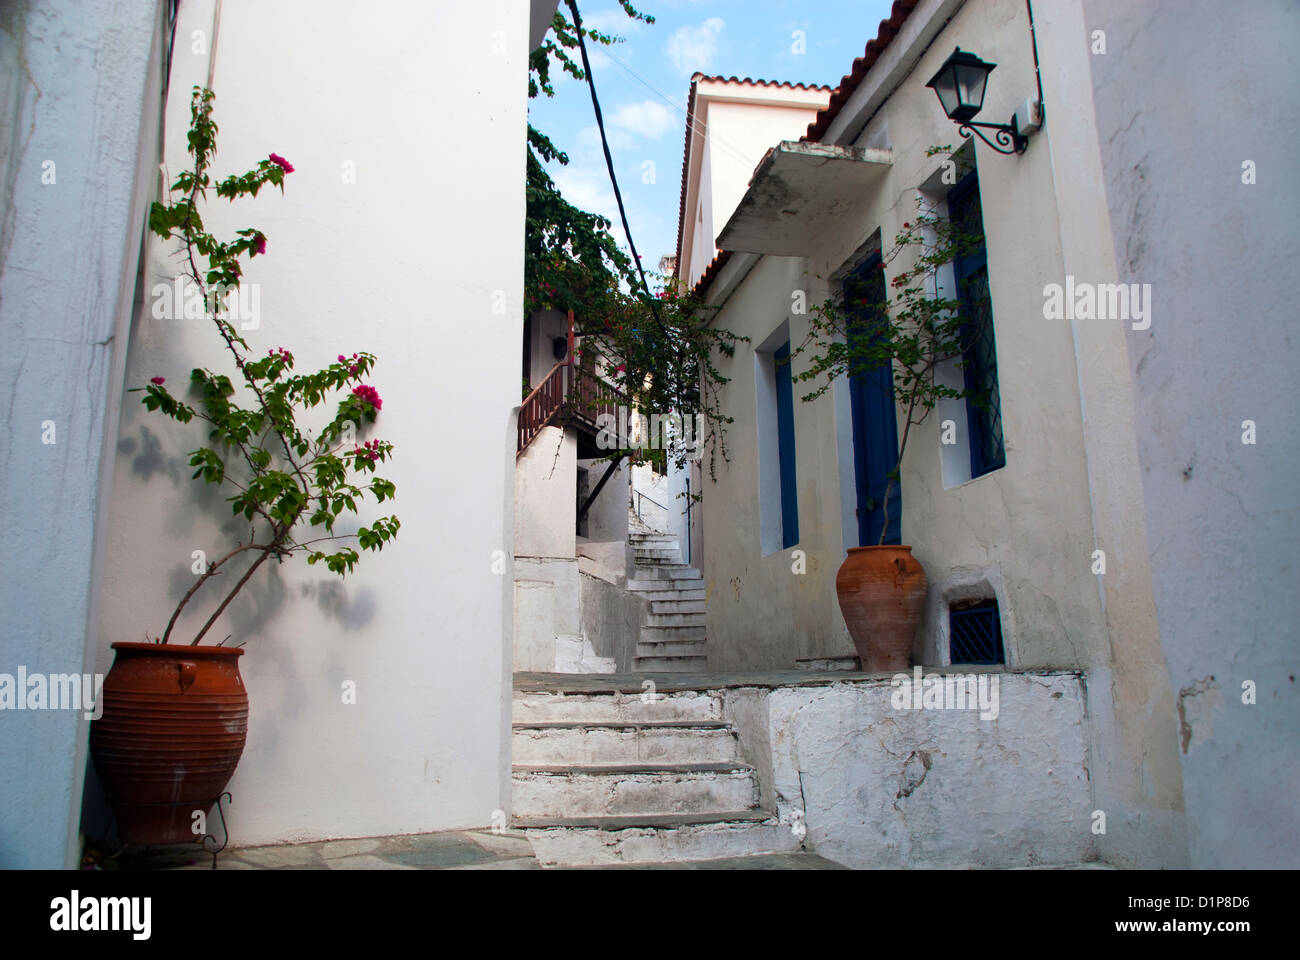 Greece, Greek, Skiathos street view, tourism, tourist, Peace, holiday, vacation, tranquil, calm, Stock Photo